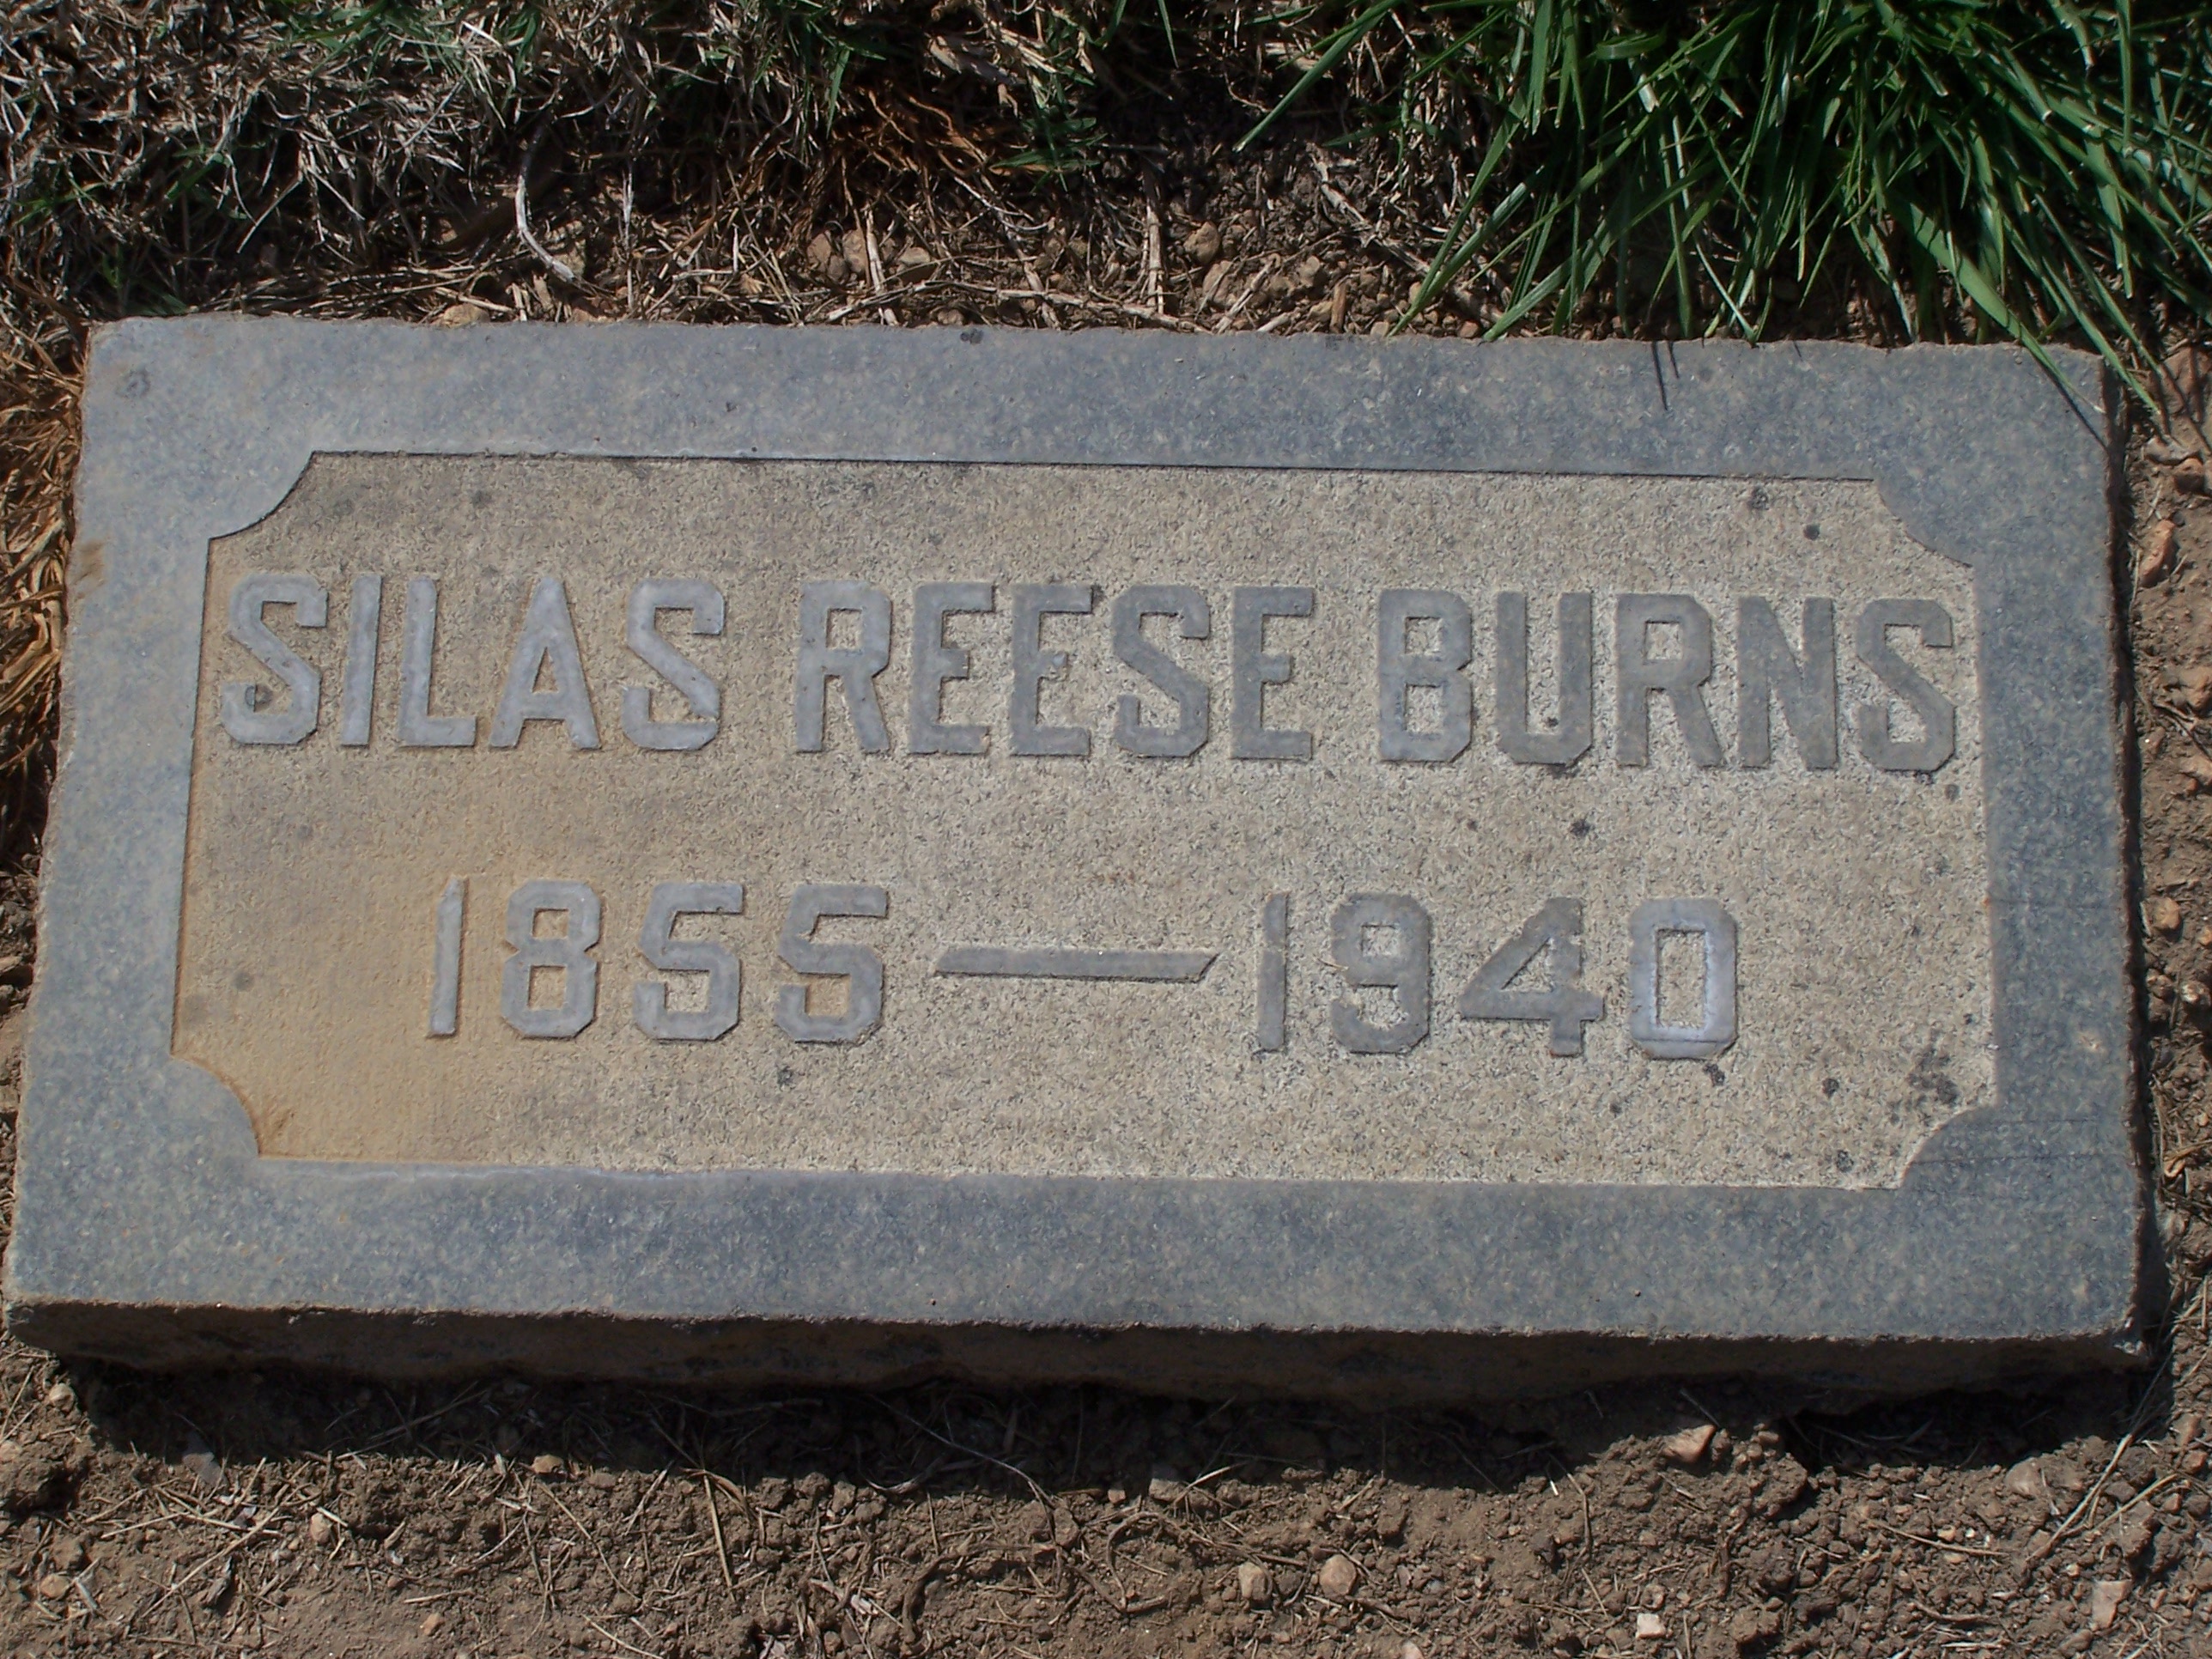 Silas Reese Burns